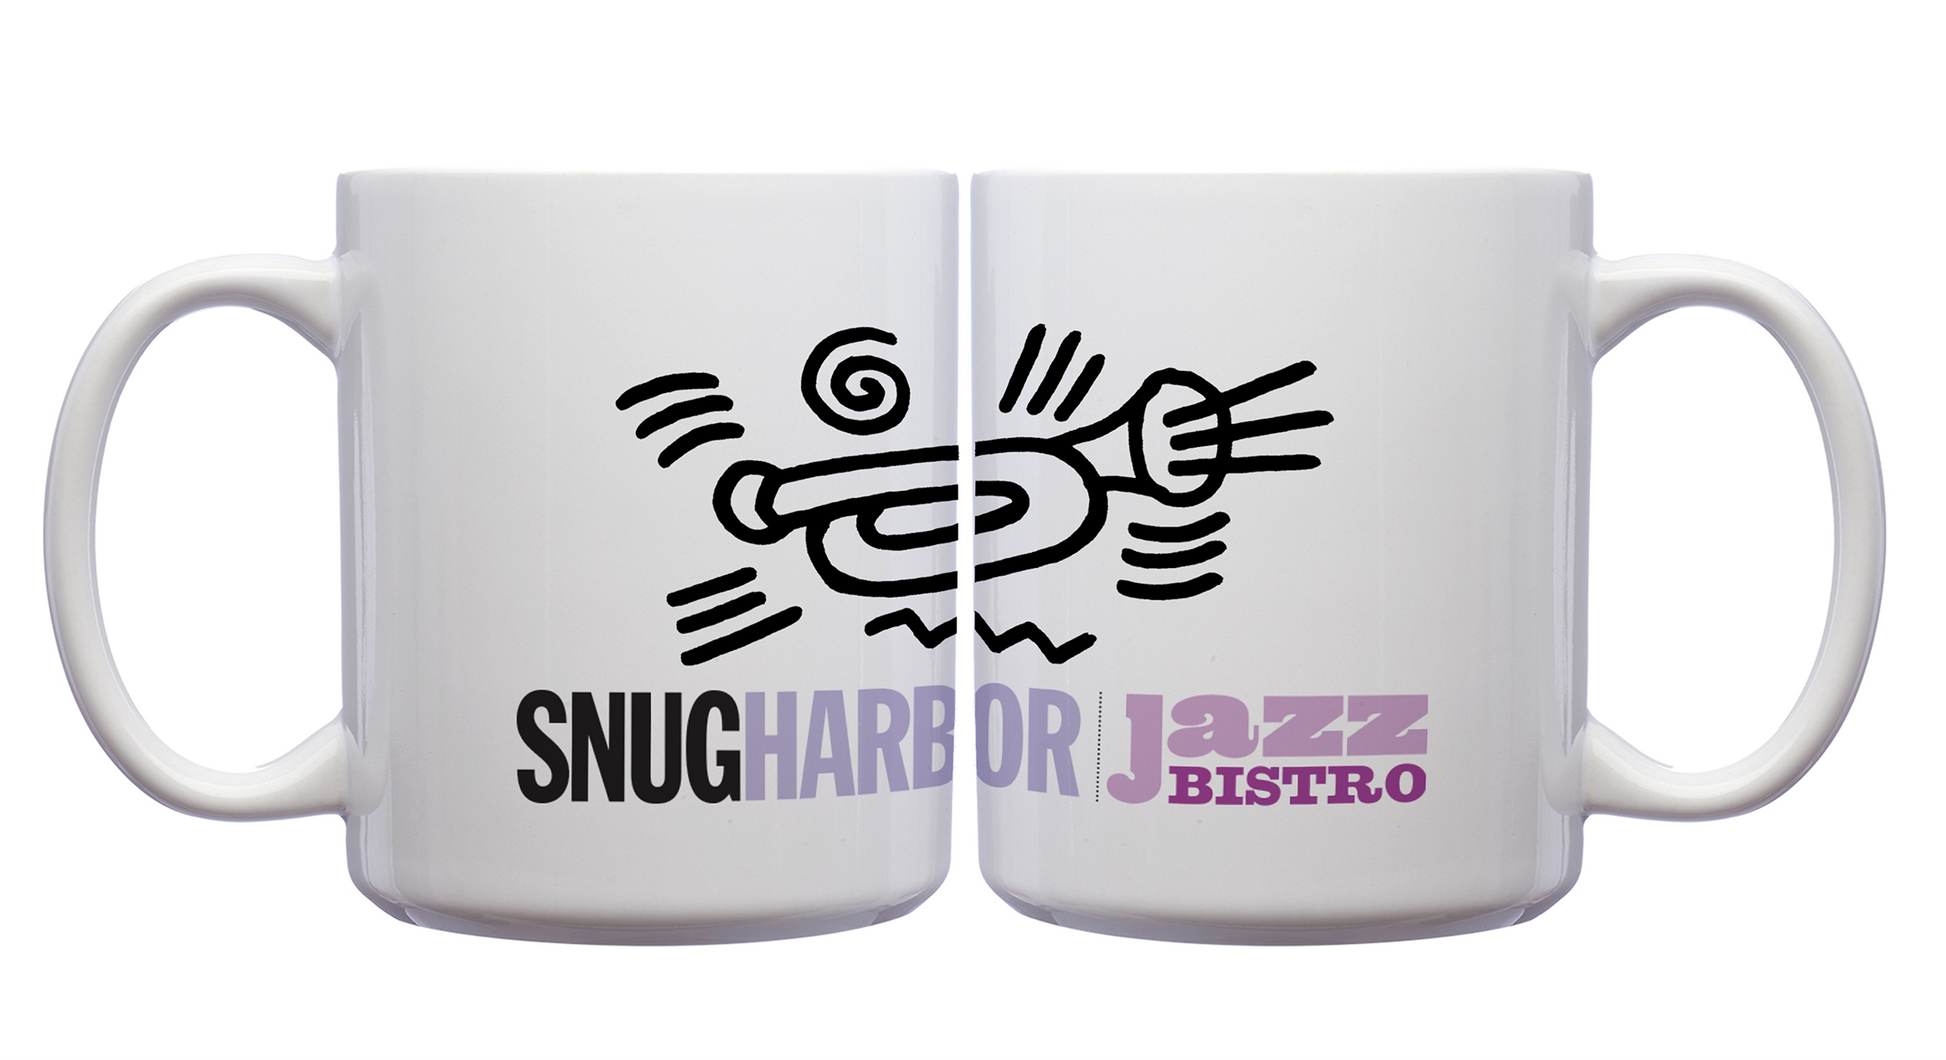 Snug Harbor Jazz Bistro Mug. New Orlean's premier jazz club